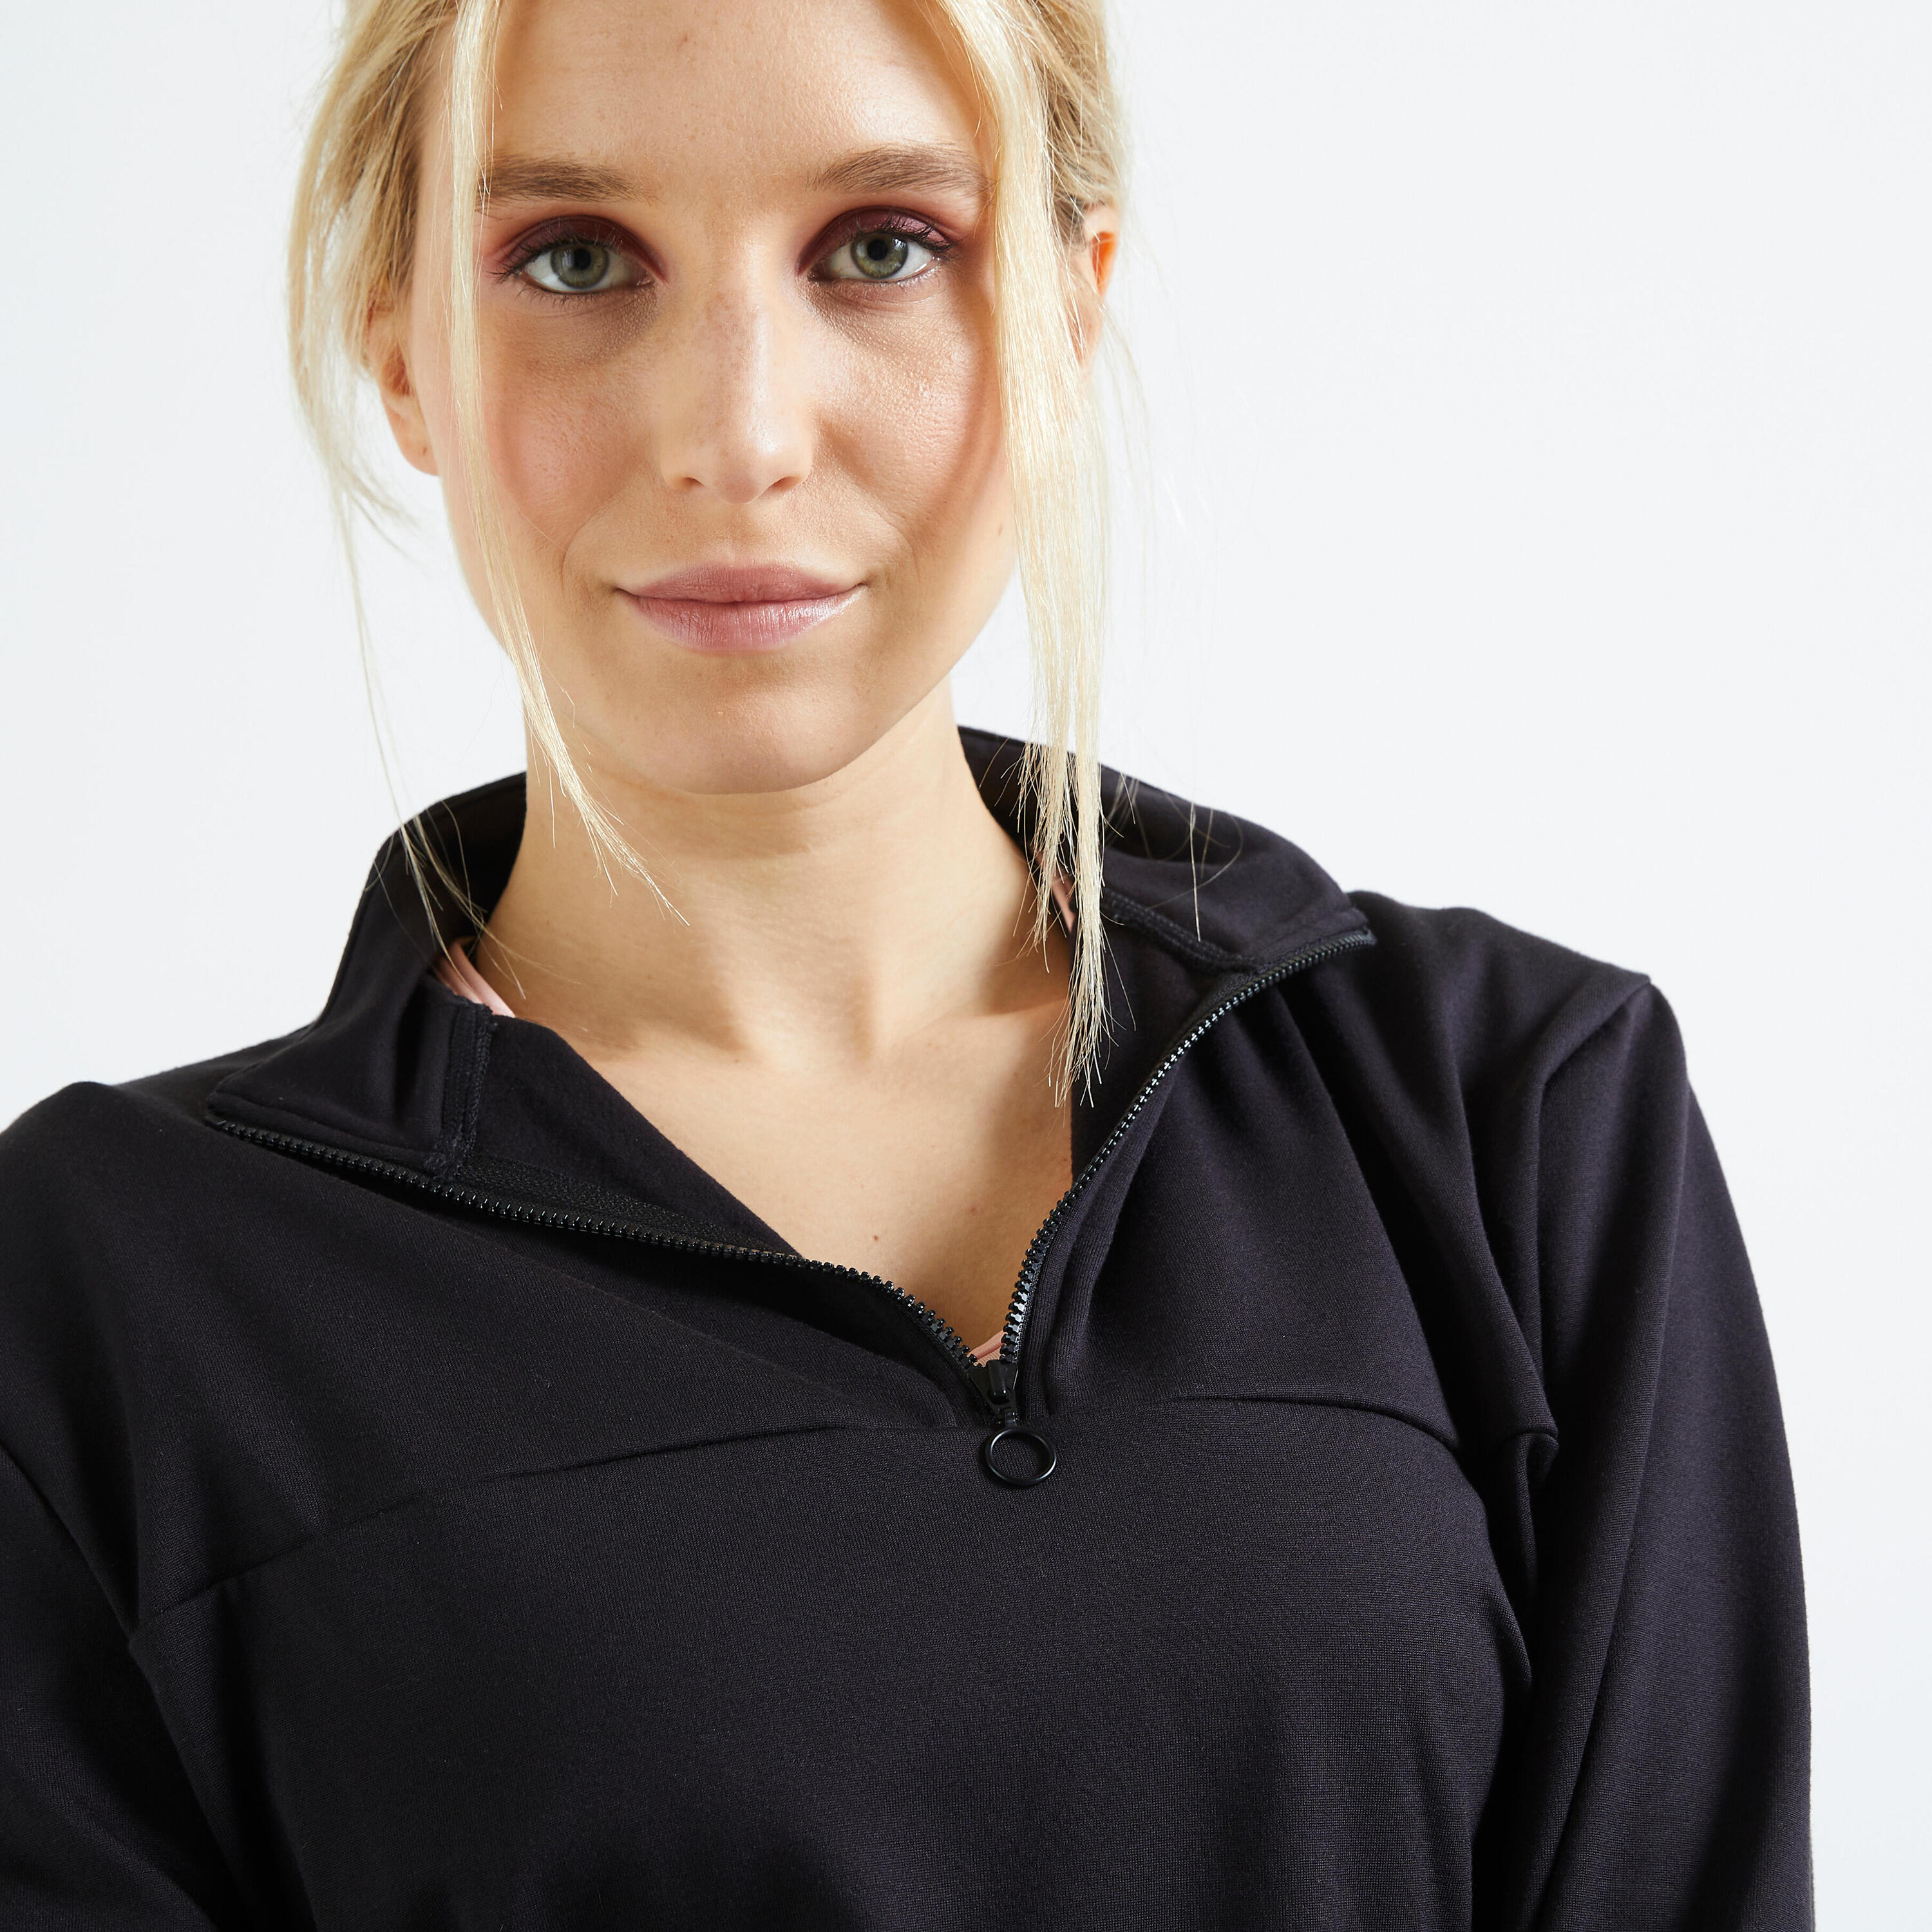 Women's Cropped Long-Sleeved Fitness Cardio Sweatshirt - Black 3/4